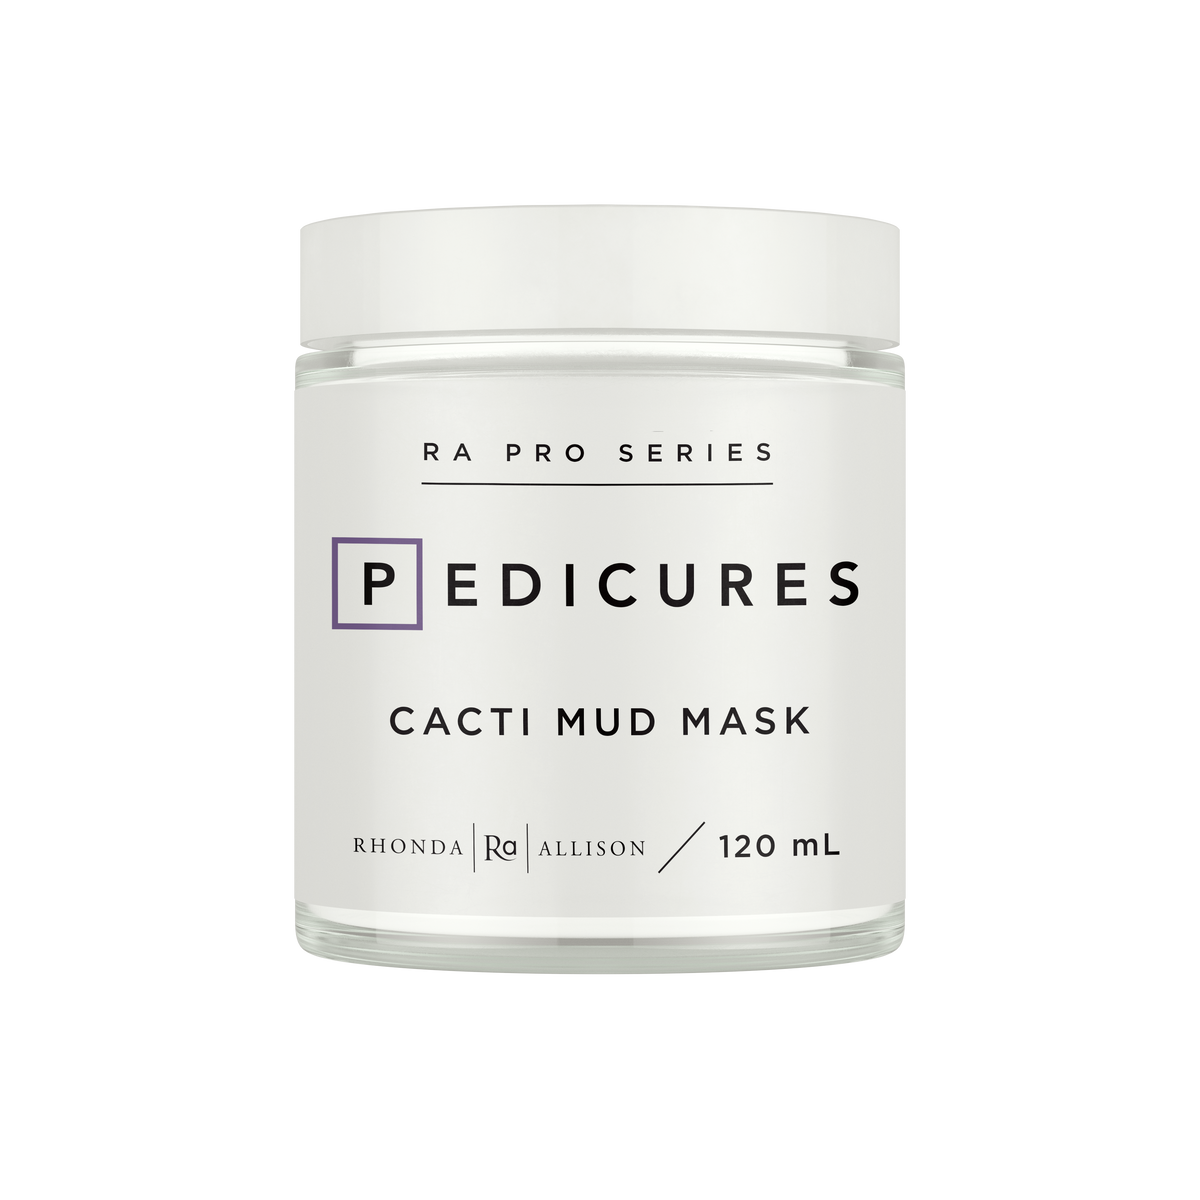 RA Pedicures Cacti Mud Mask